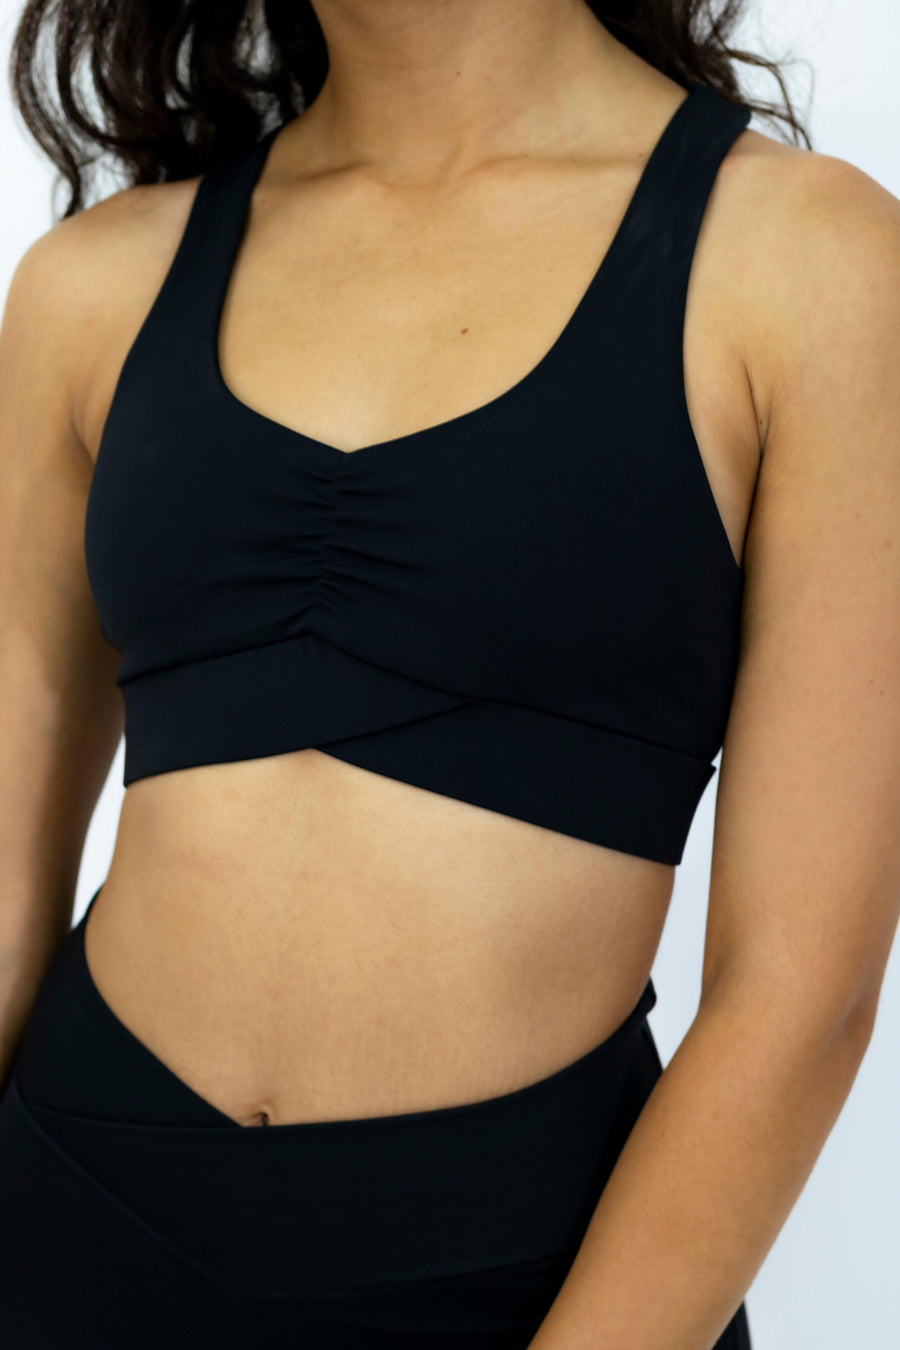 Woman's Black Sports bra